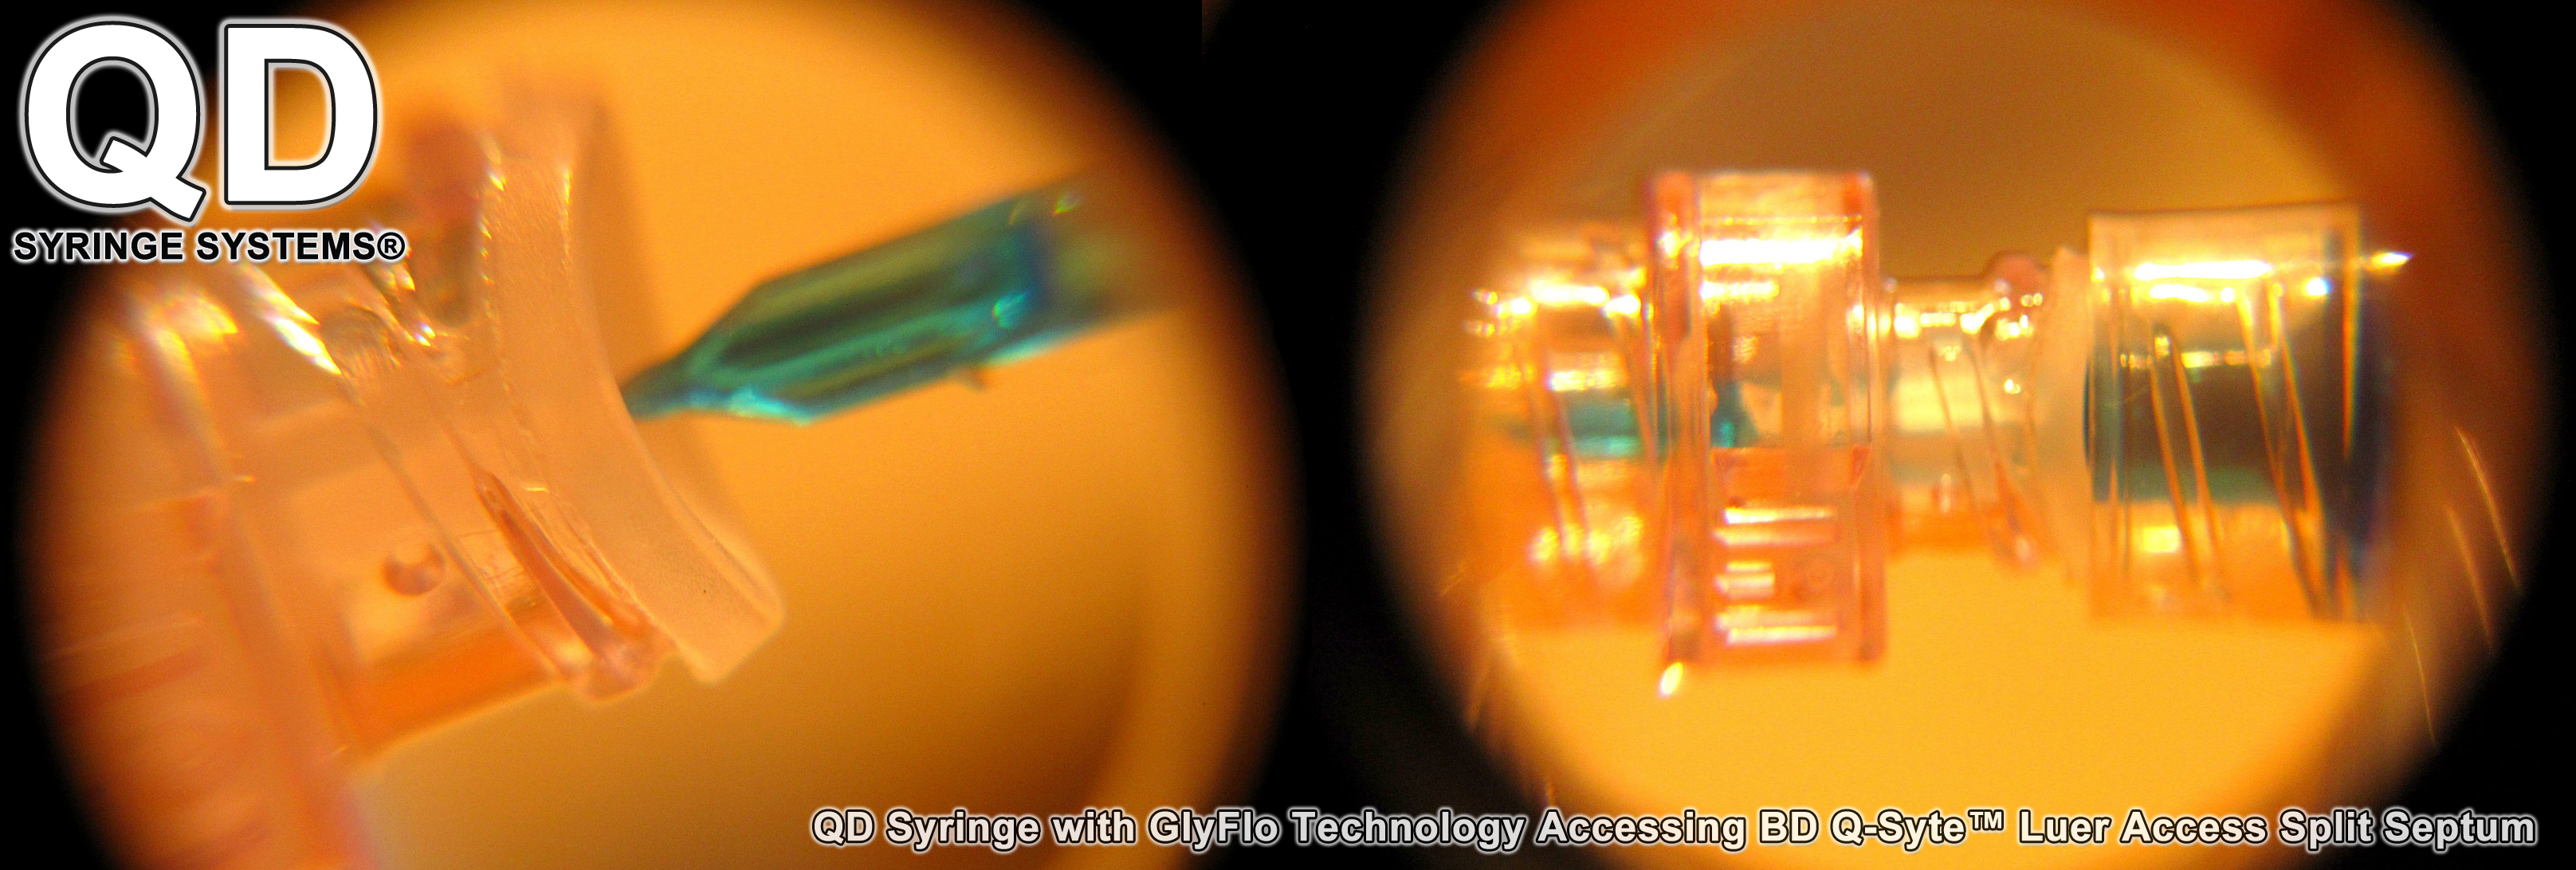 qd-syringe-glyflo-technology-accessing-bd-q-syte-split-septum-luer